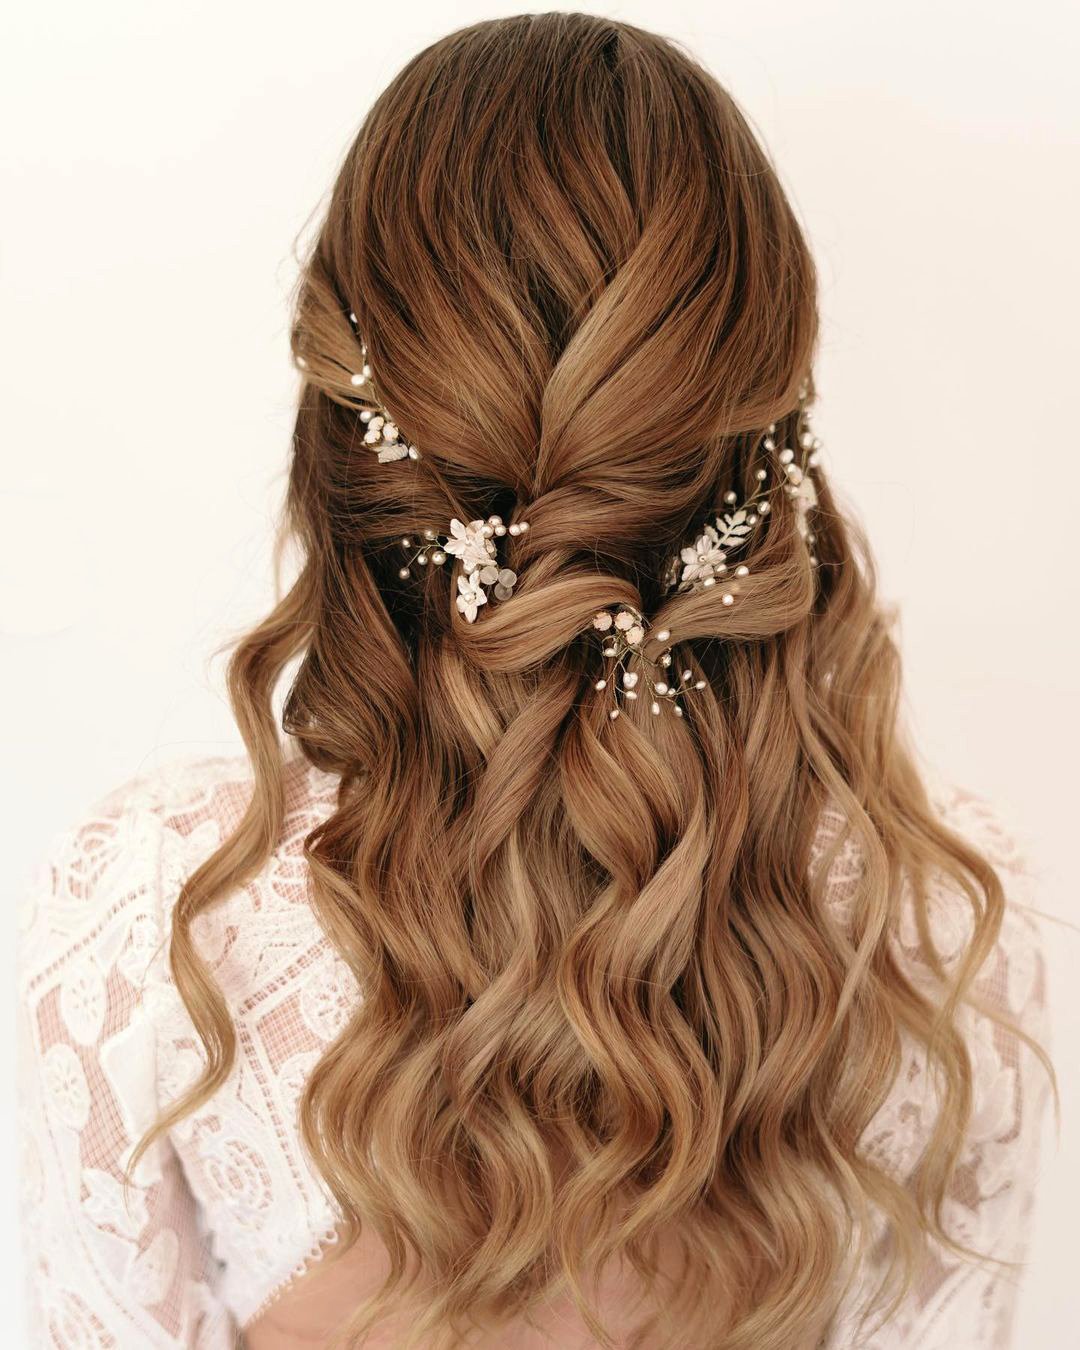 classic wedding hairstyles wavy hair down with white flower pins unityrhodesbridal